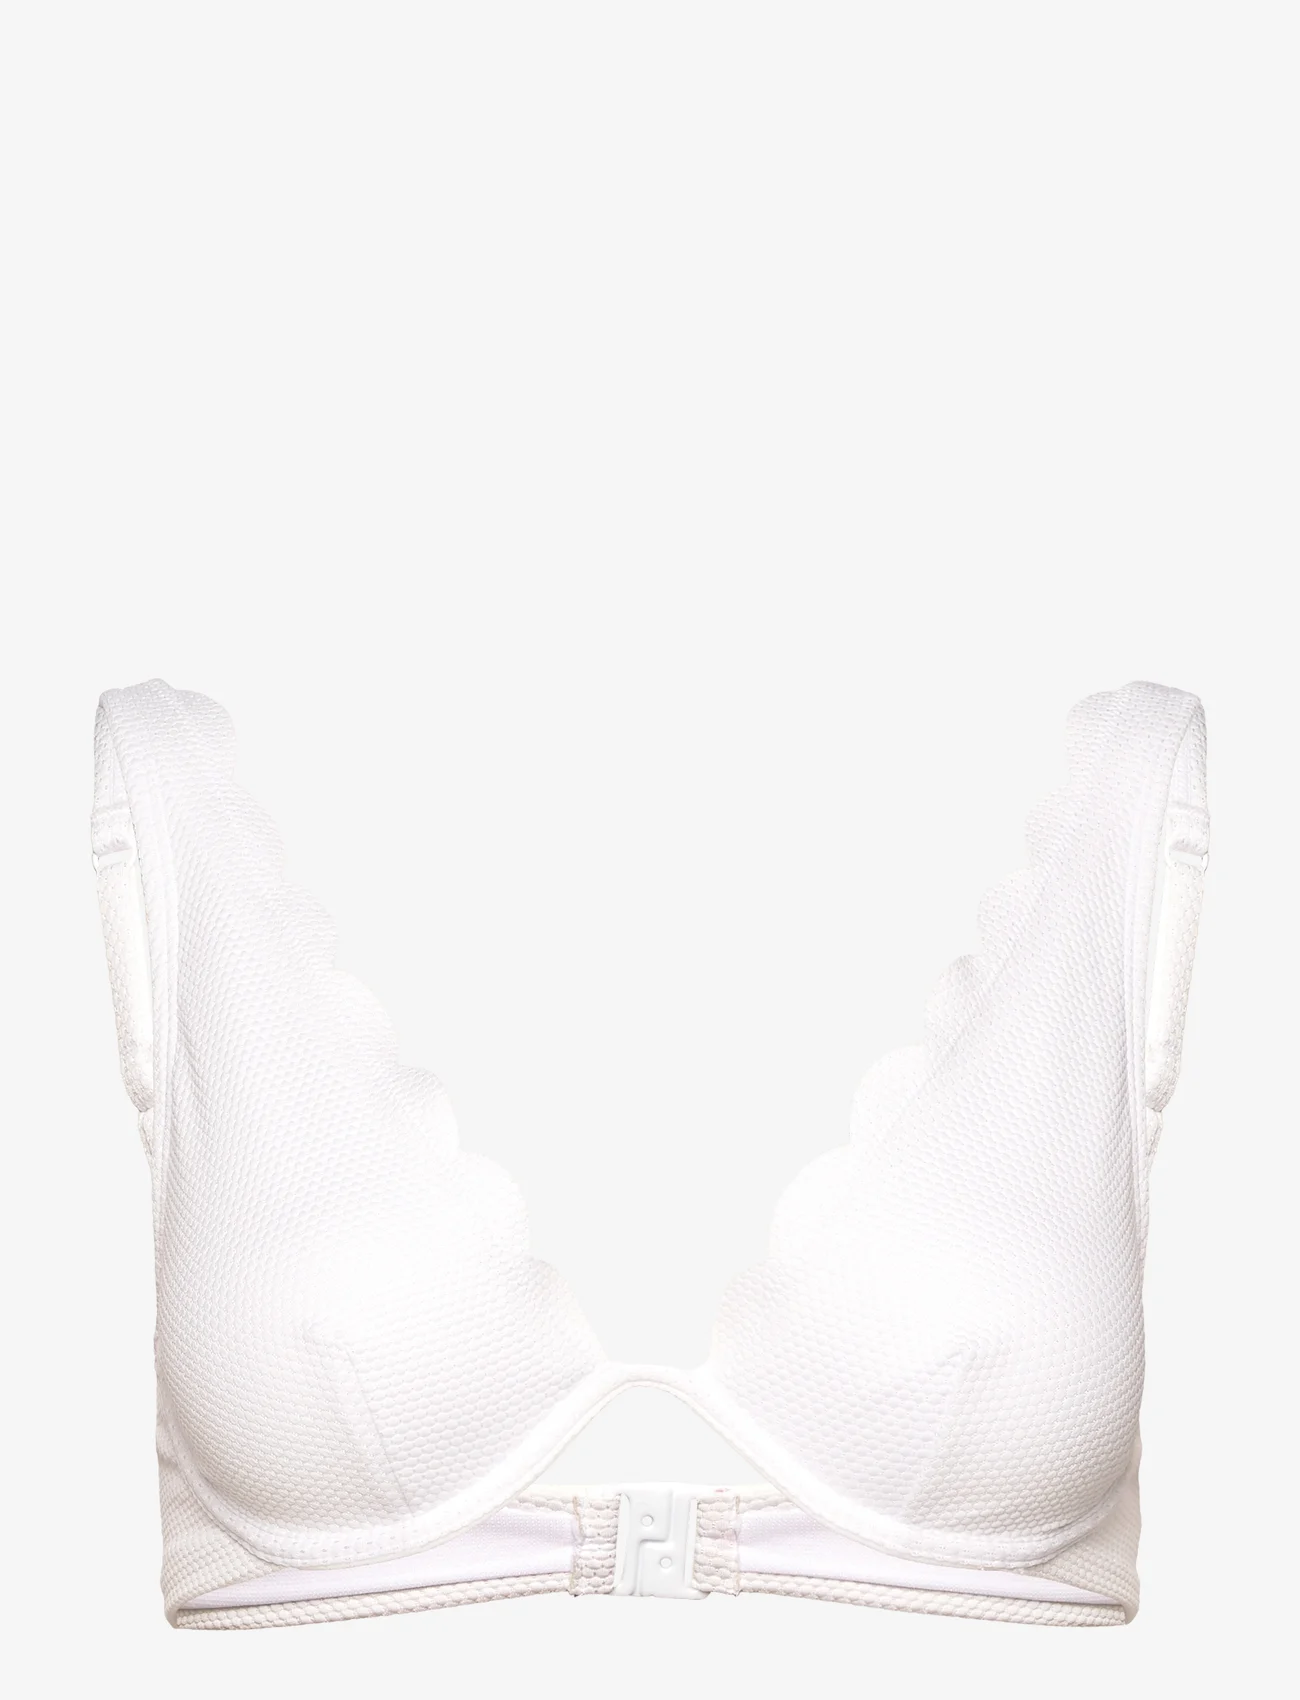 Hunkemöller - Scallop CW up - triangle bikinis - white - 0